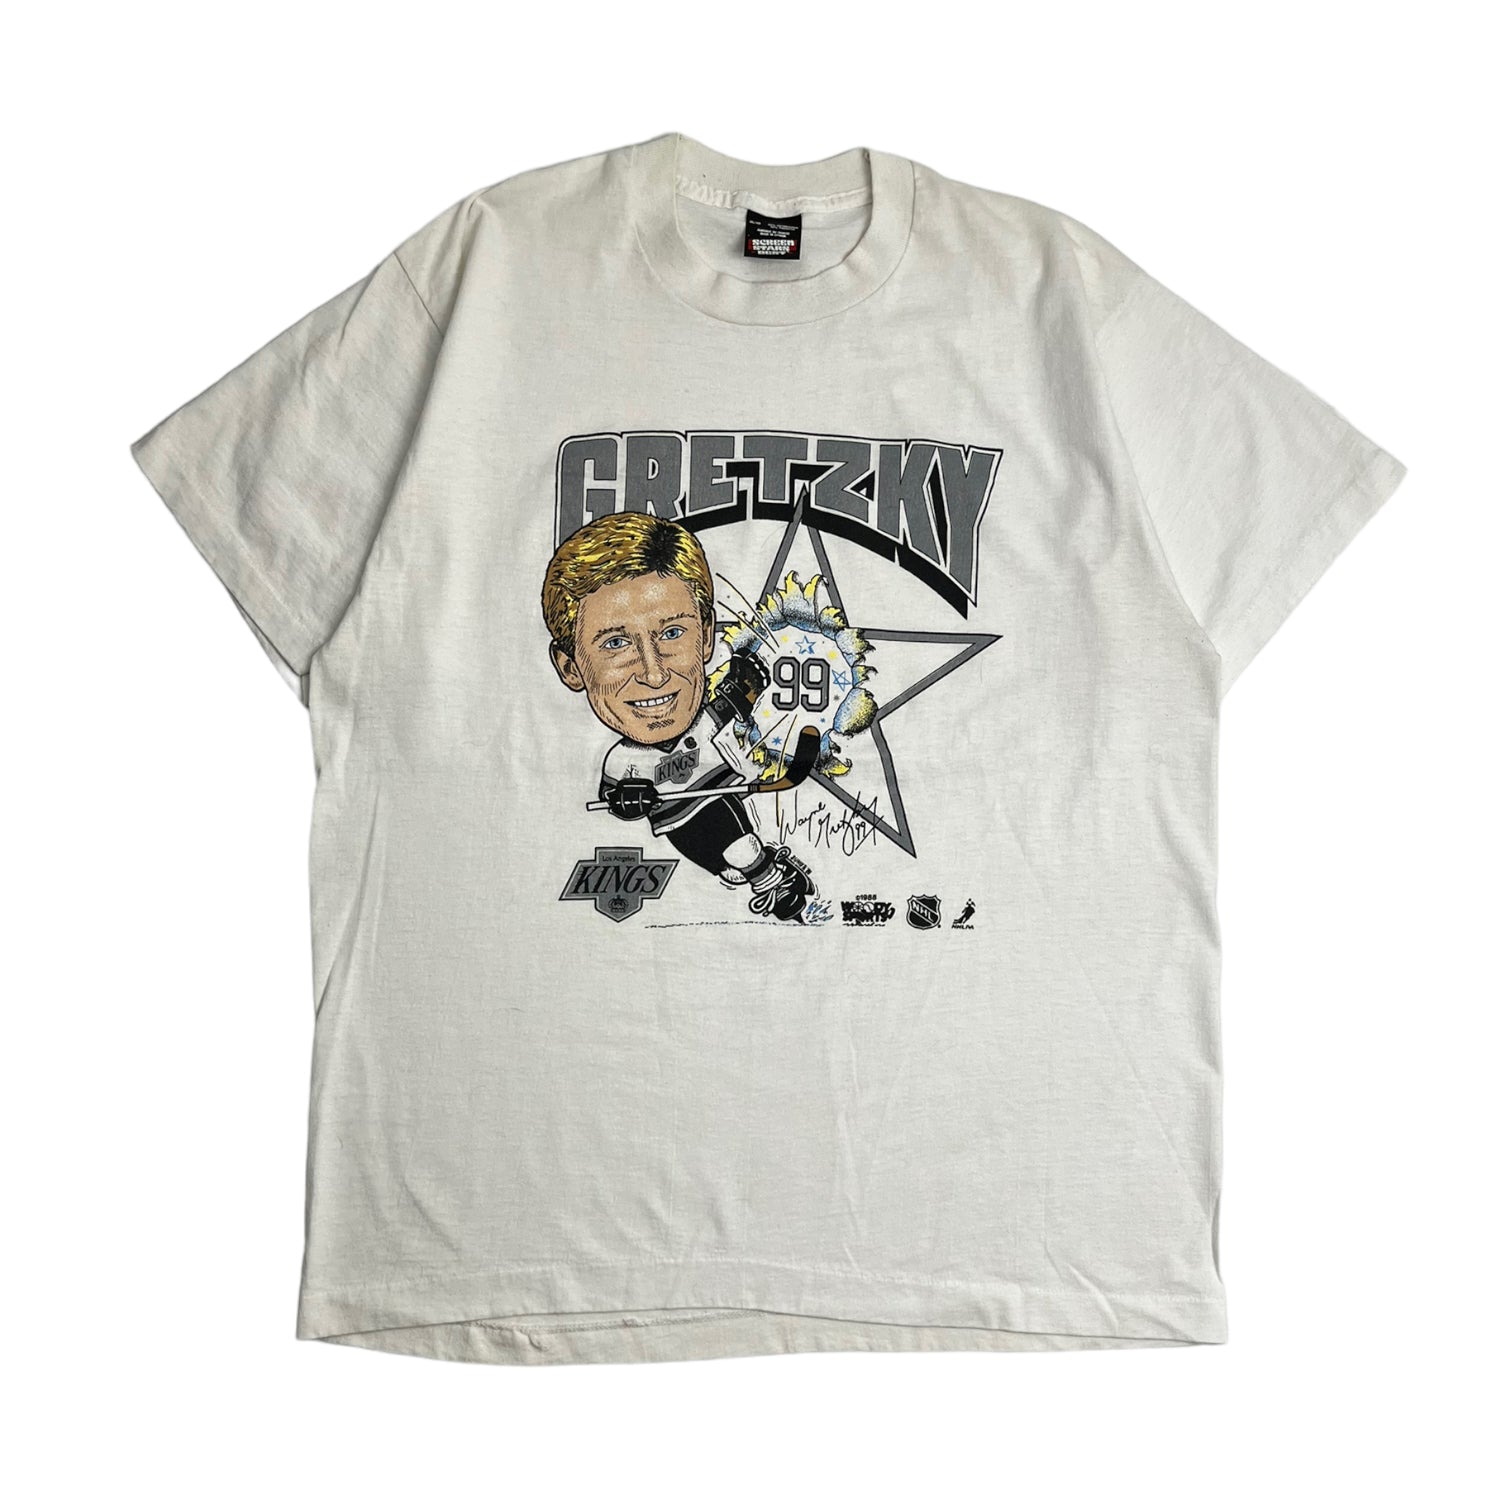 Vintage LA Kings Gretzky Shirt - Vintage Graphic Shirt